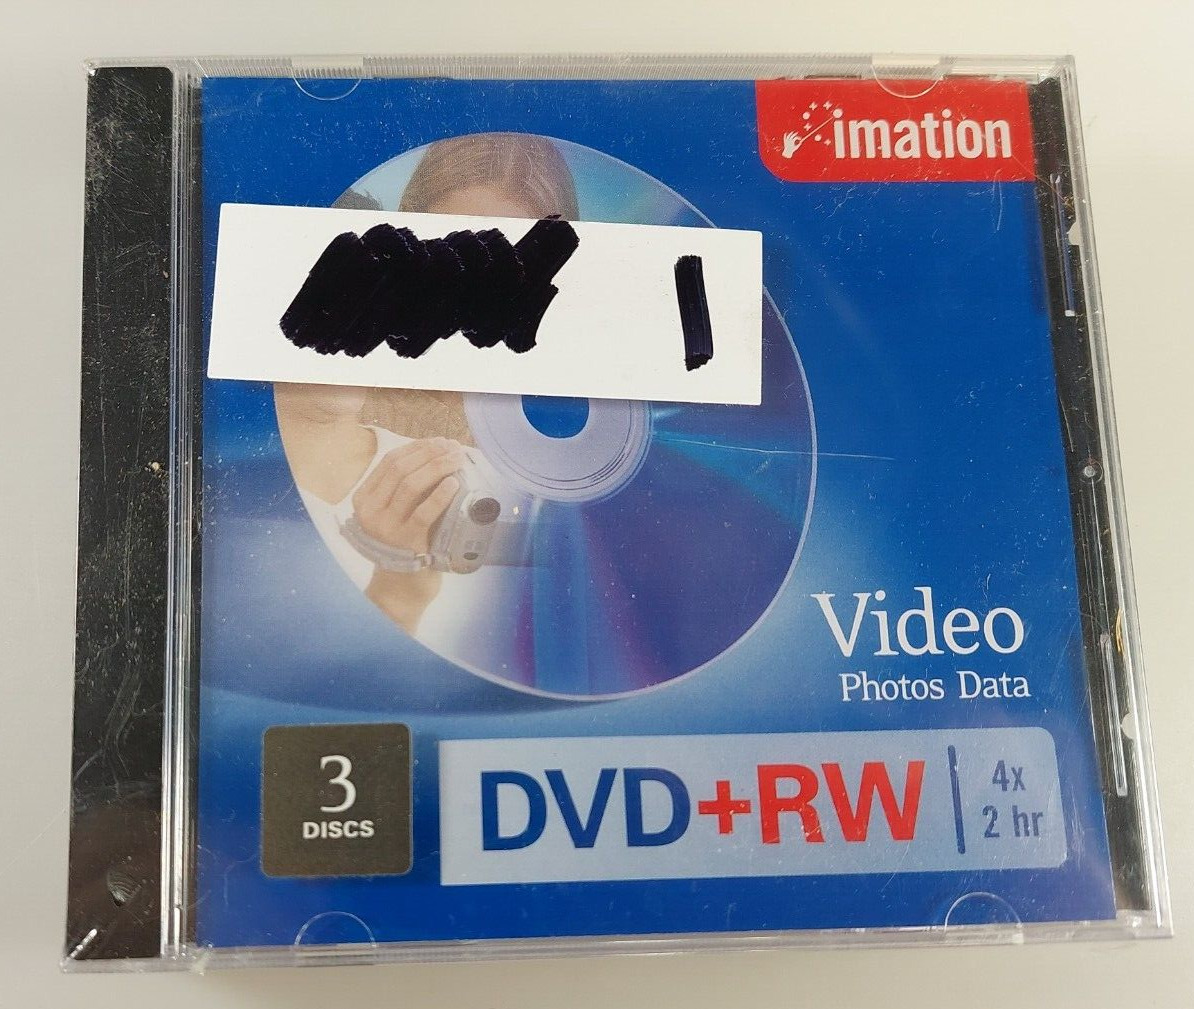 NEW 3 Pack Imation DVD+RW Rewritable Sealed Discs 120 Min / 4x (1)